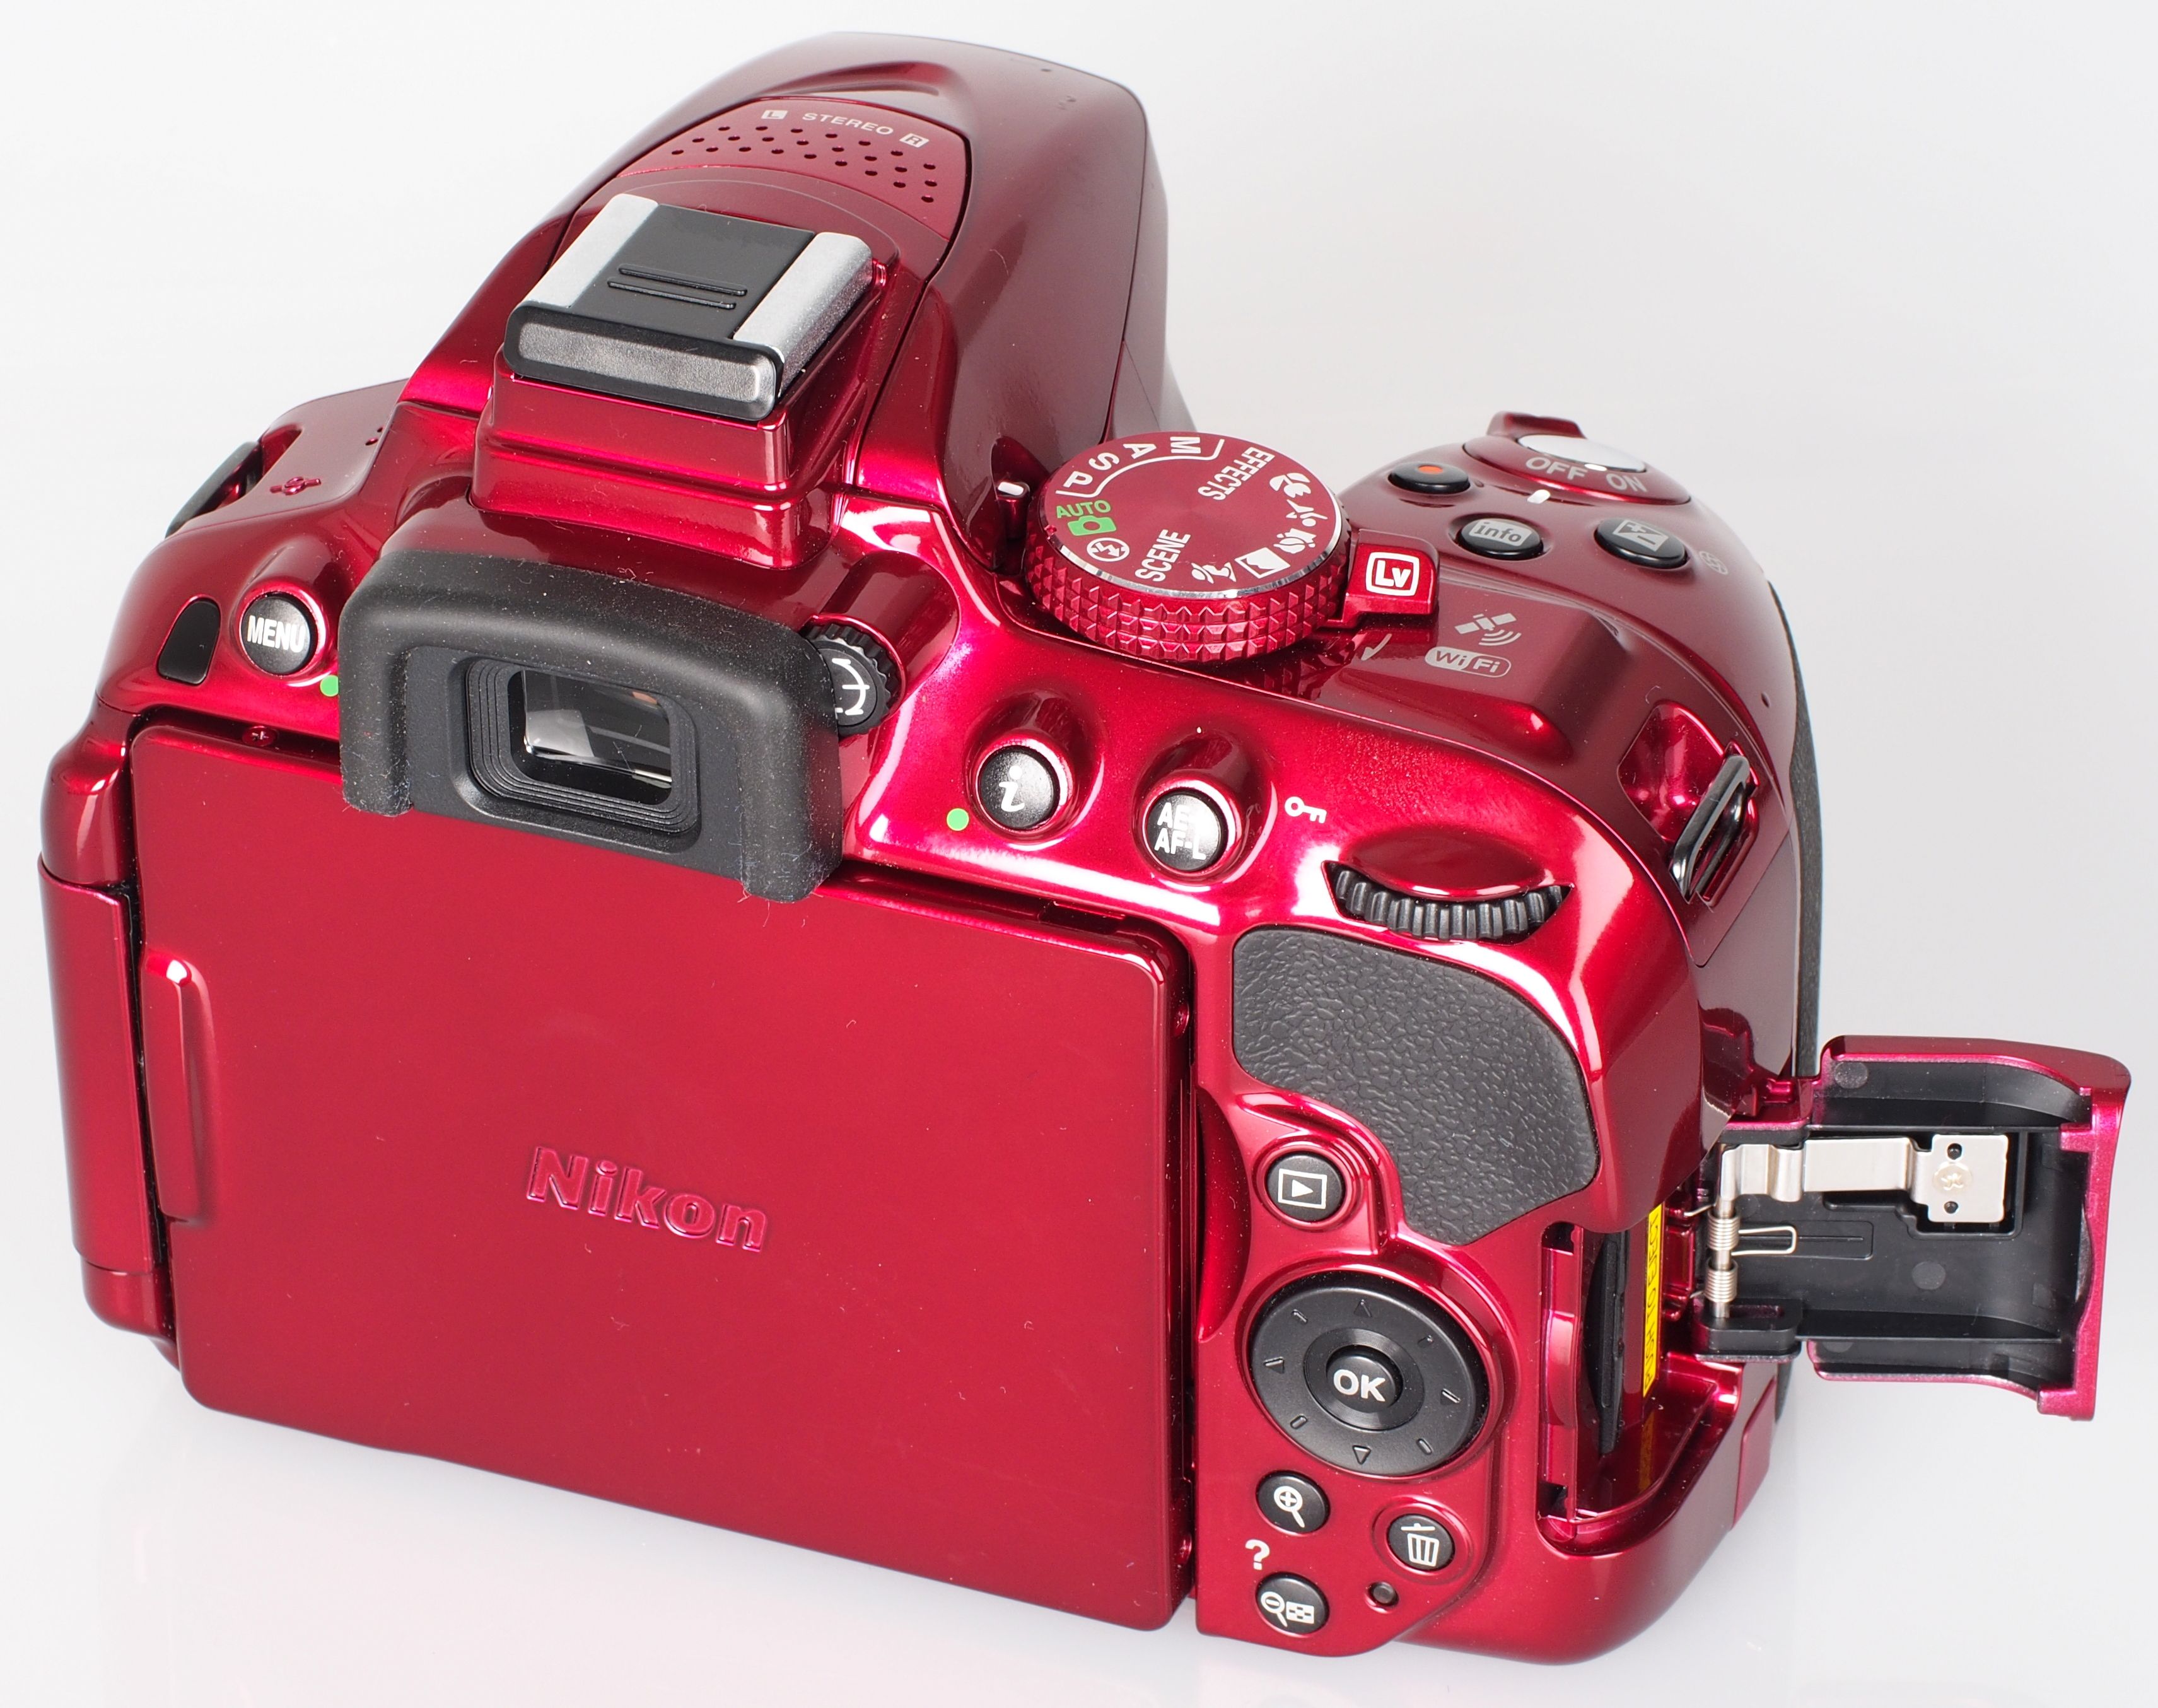 Highres Nikon D5300 Red 14 1383658456